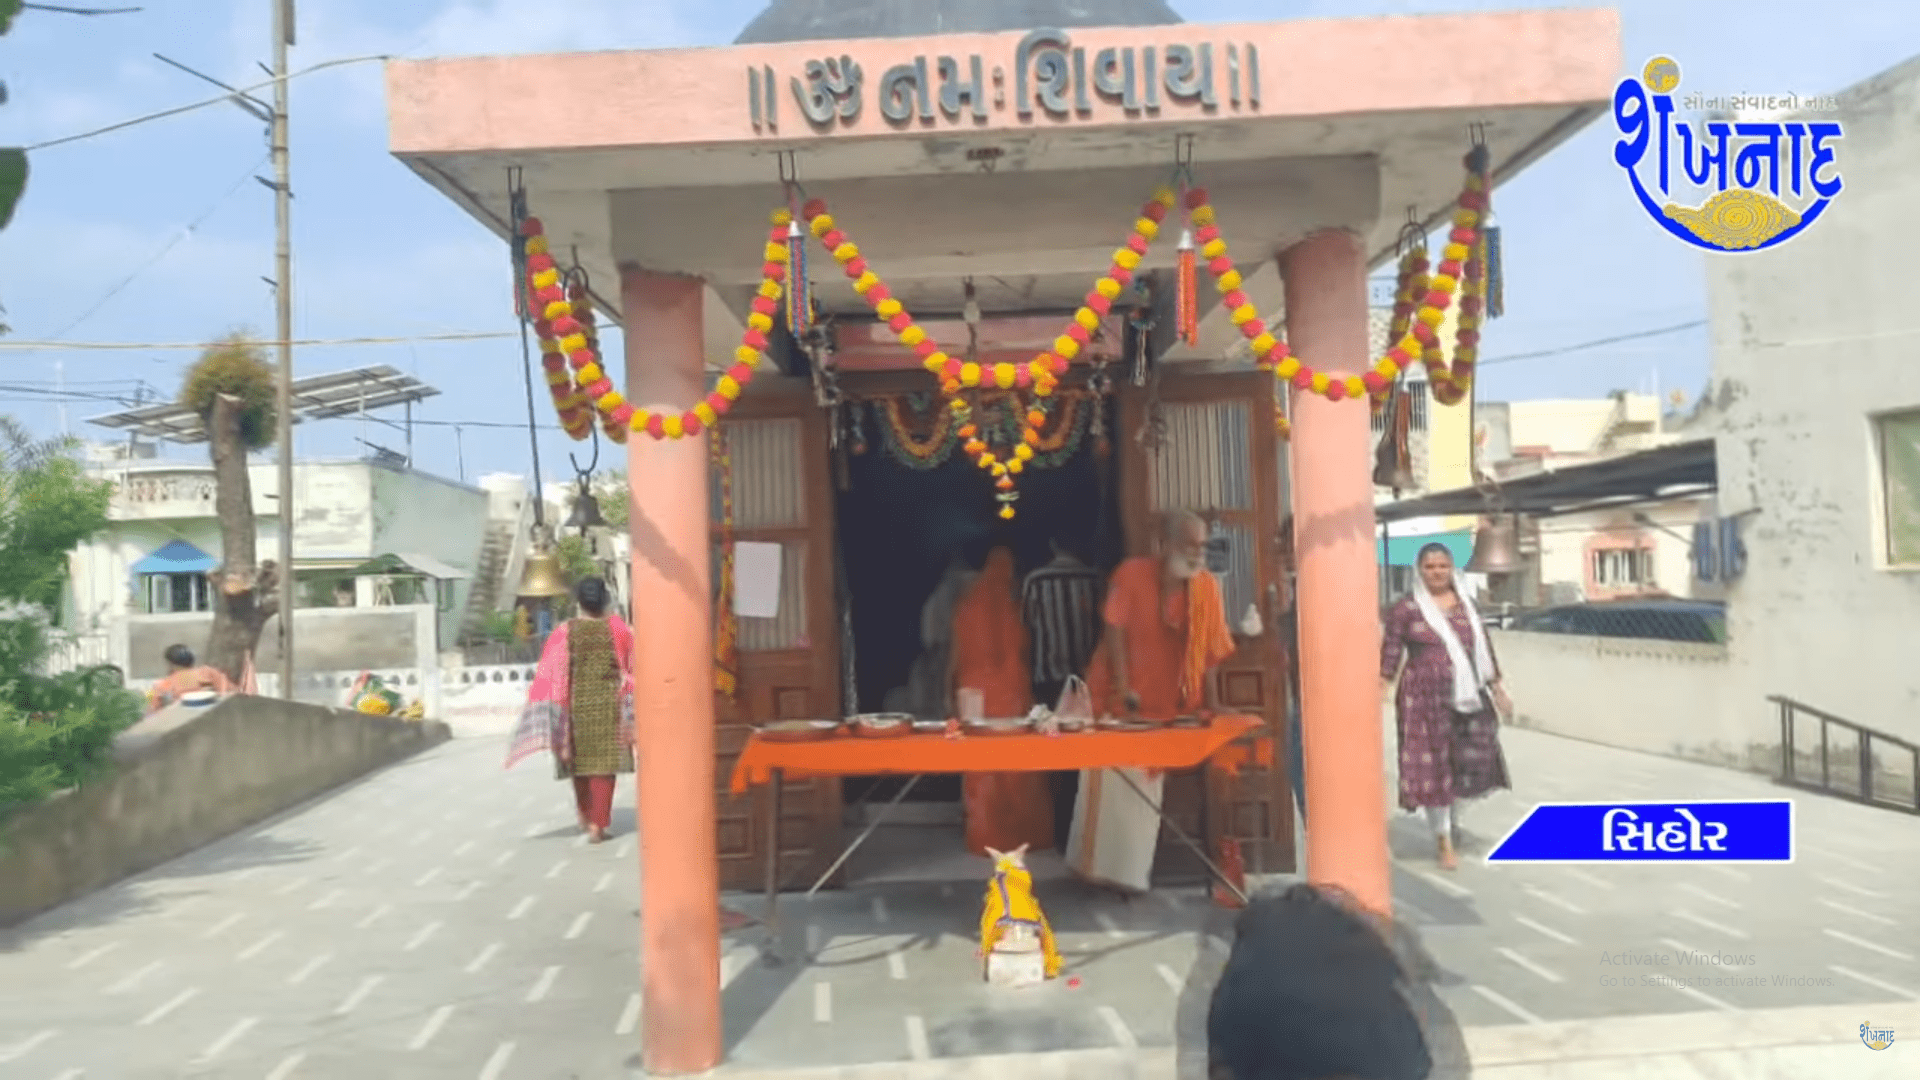 At the temple of Shambhunath Mahadev in Sihore Mahagautmeswar Nagar, 12 Jyotirlingas are observed.